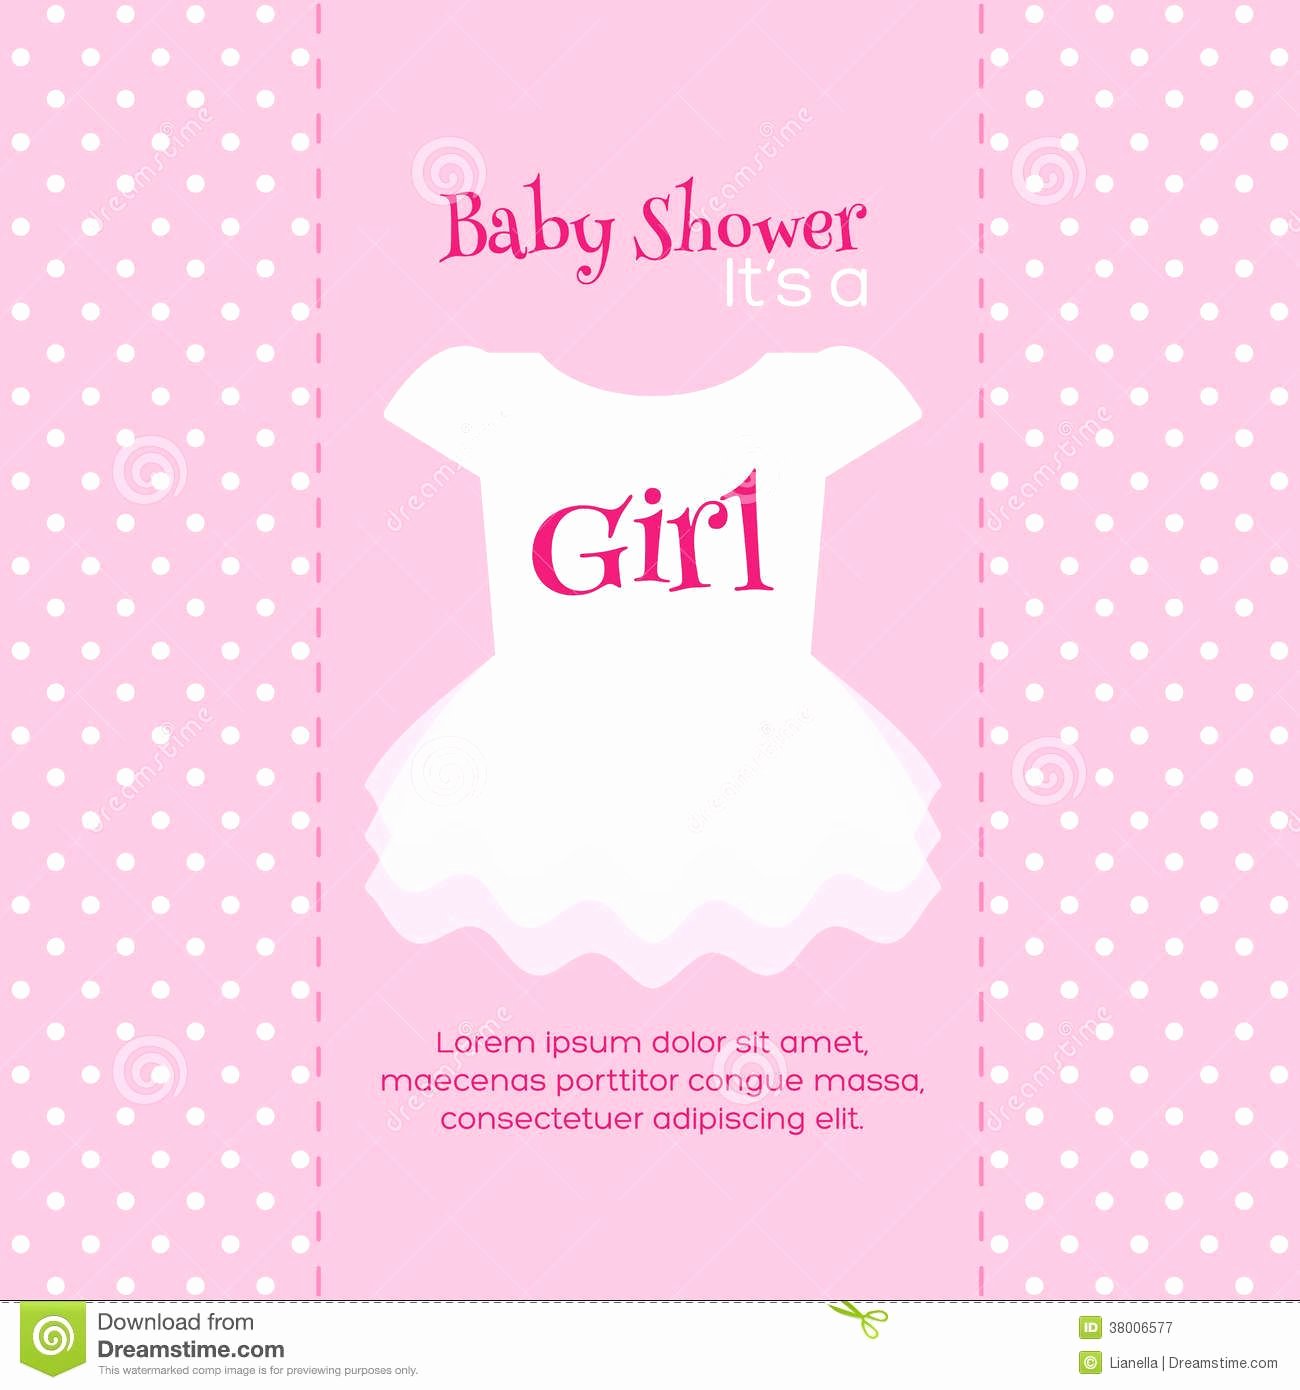 Printable Baby Shower Invitation Template New Design Free Printable Baby Shower Invitations for Girls